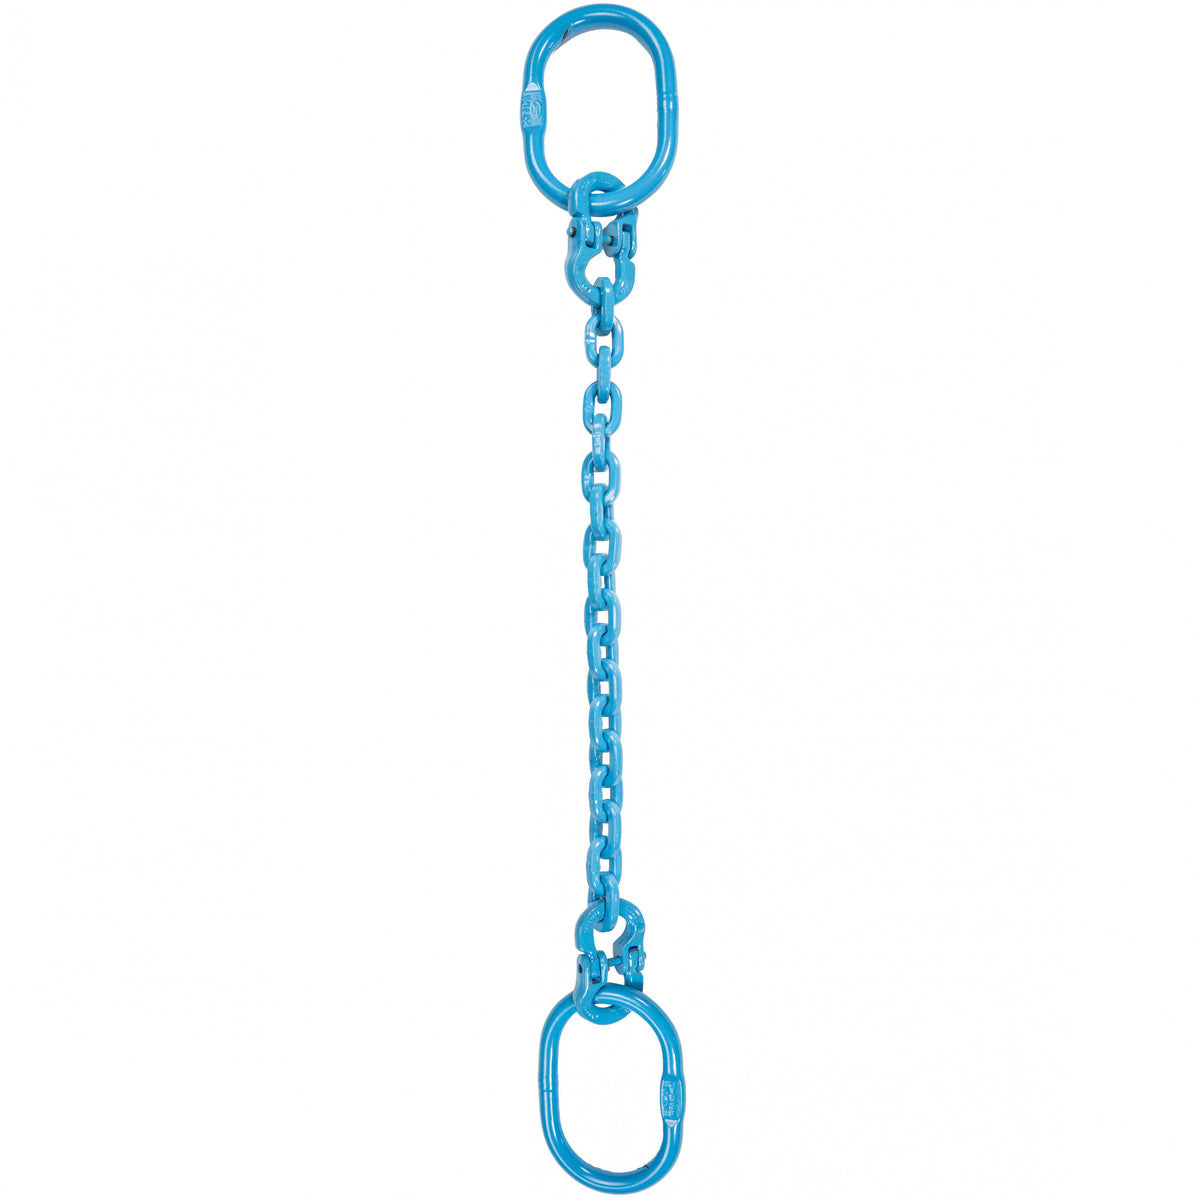 9/32" x 3' - Pewag Single Leg Chain Sling w/ Oblong Master Links - Grade 120